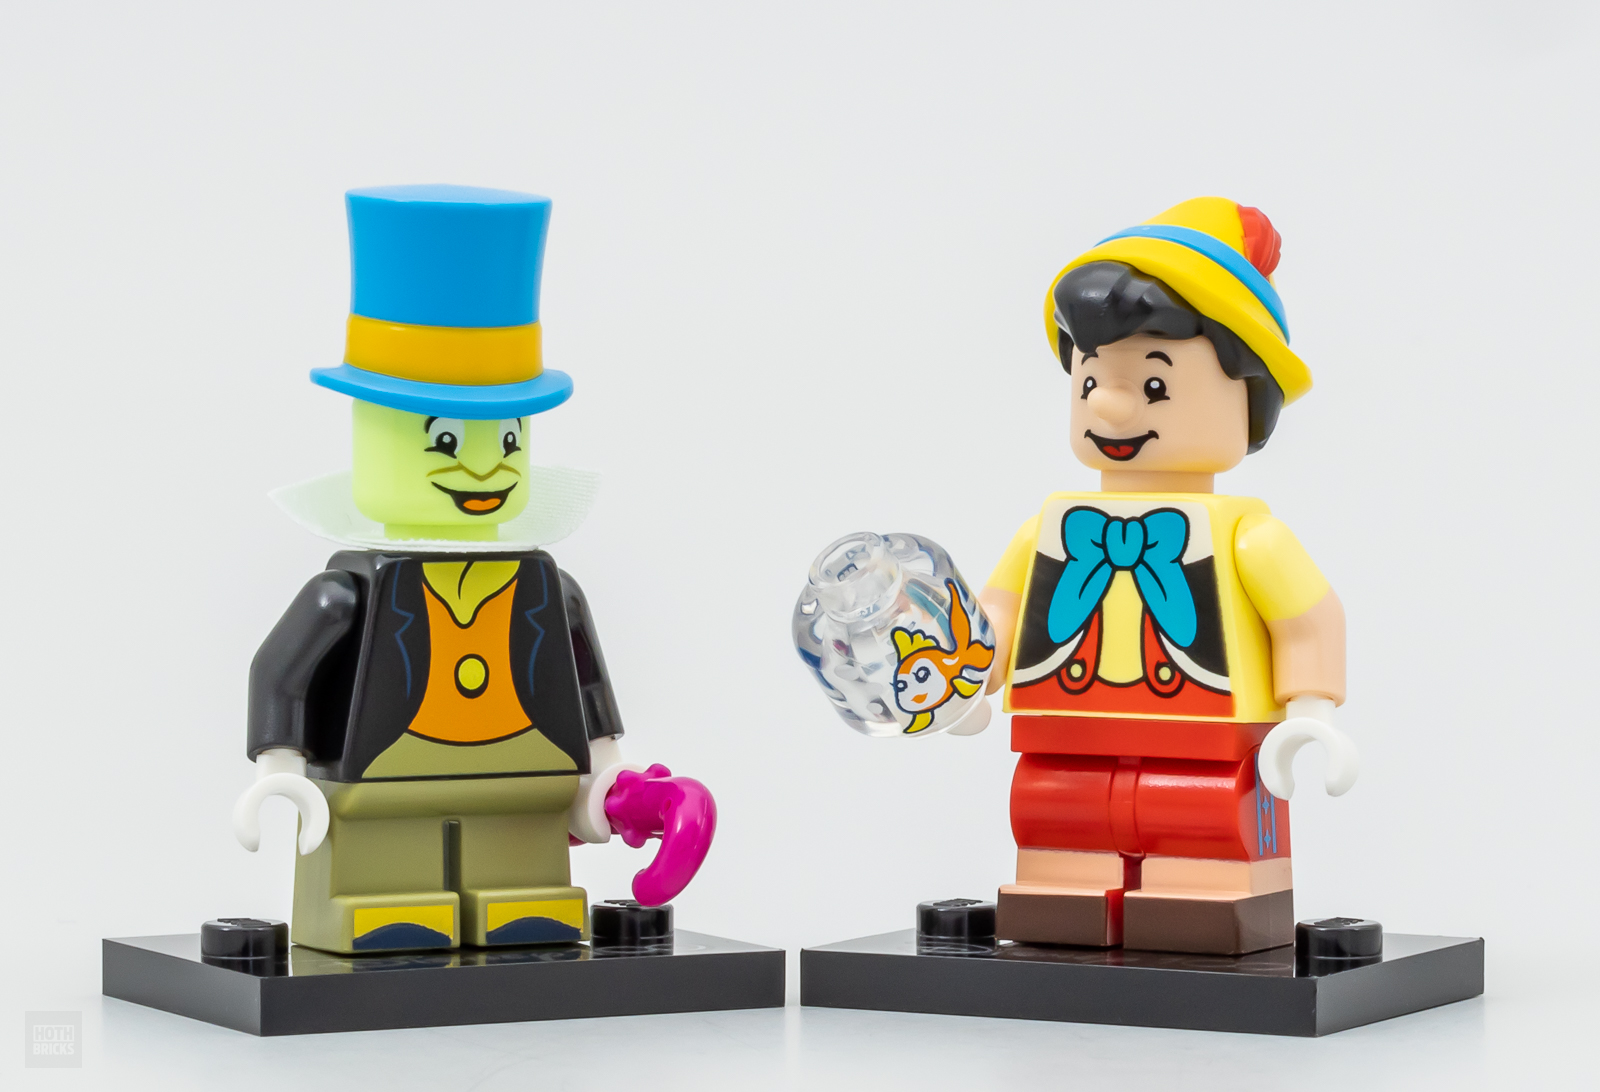 LEGO 71038 DISNEY 100 ~ Series 2, 3 Minifigures Sorcerer Mickey